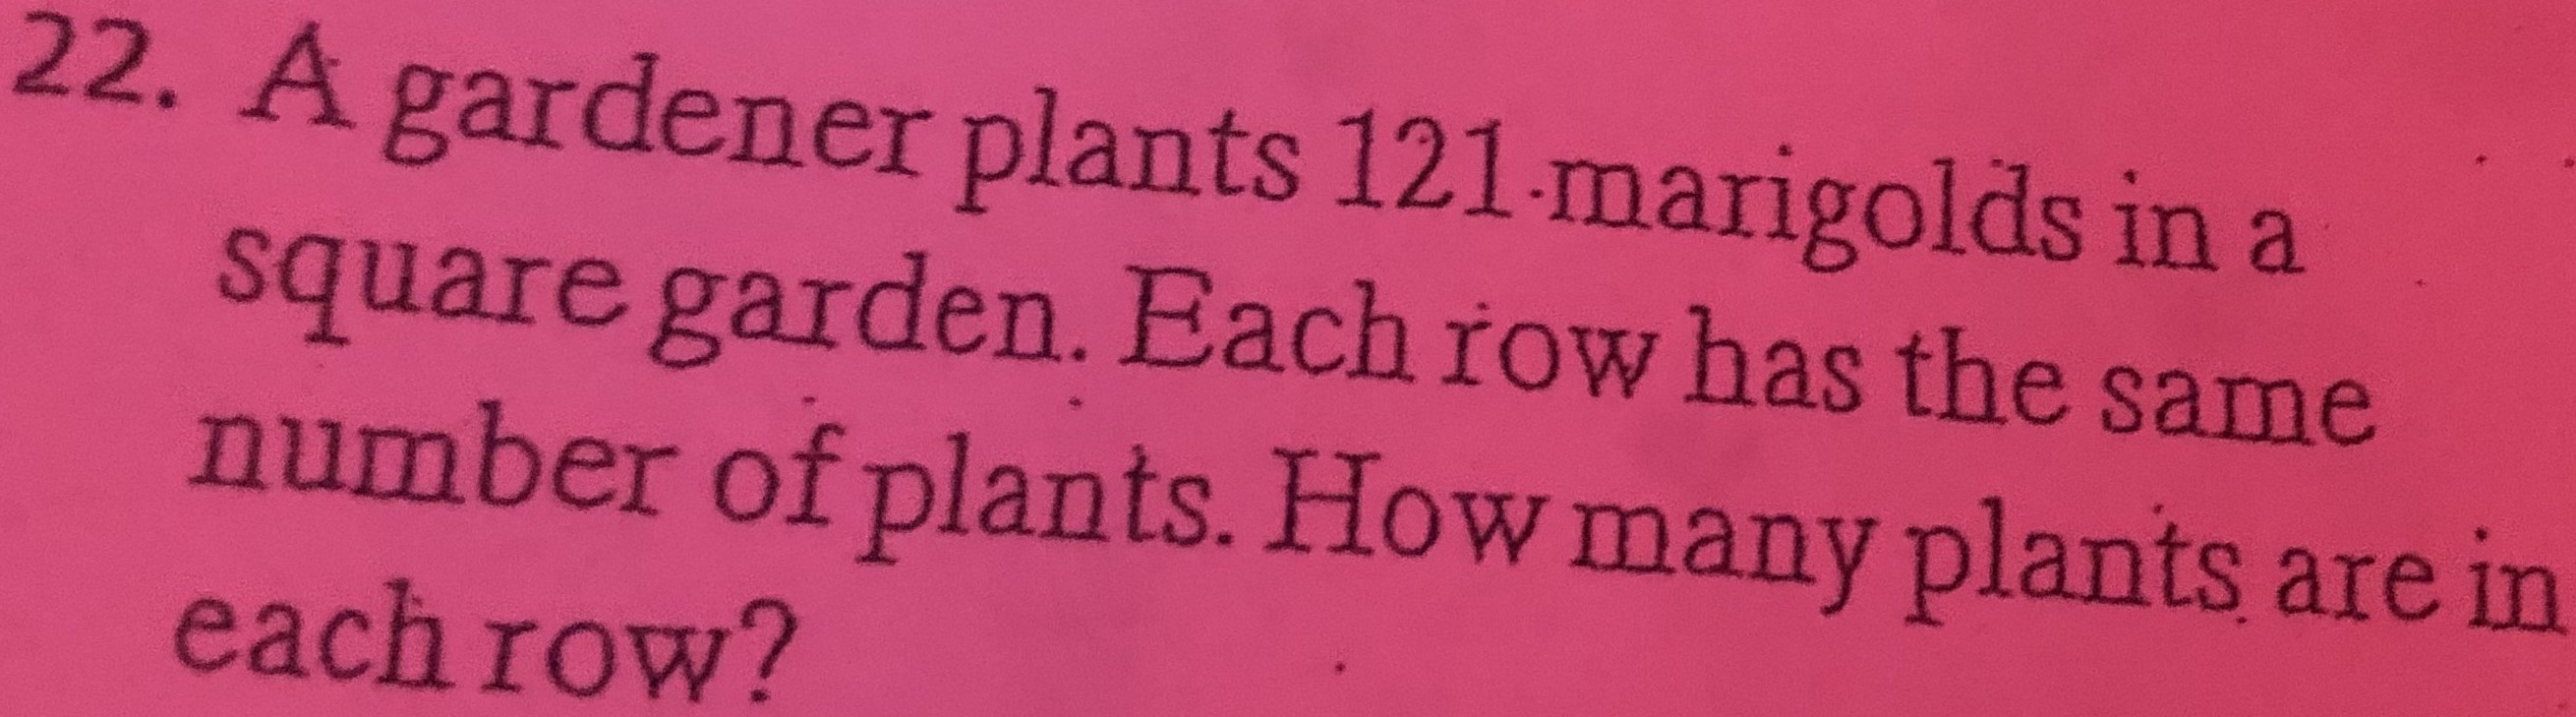 A gardener plants 121 marigolds in a square garden...